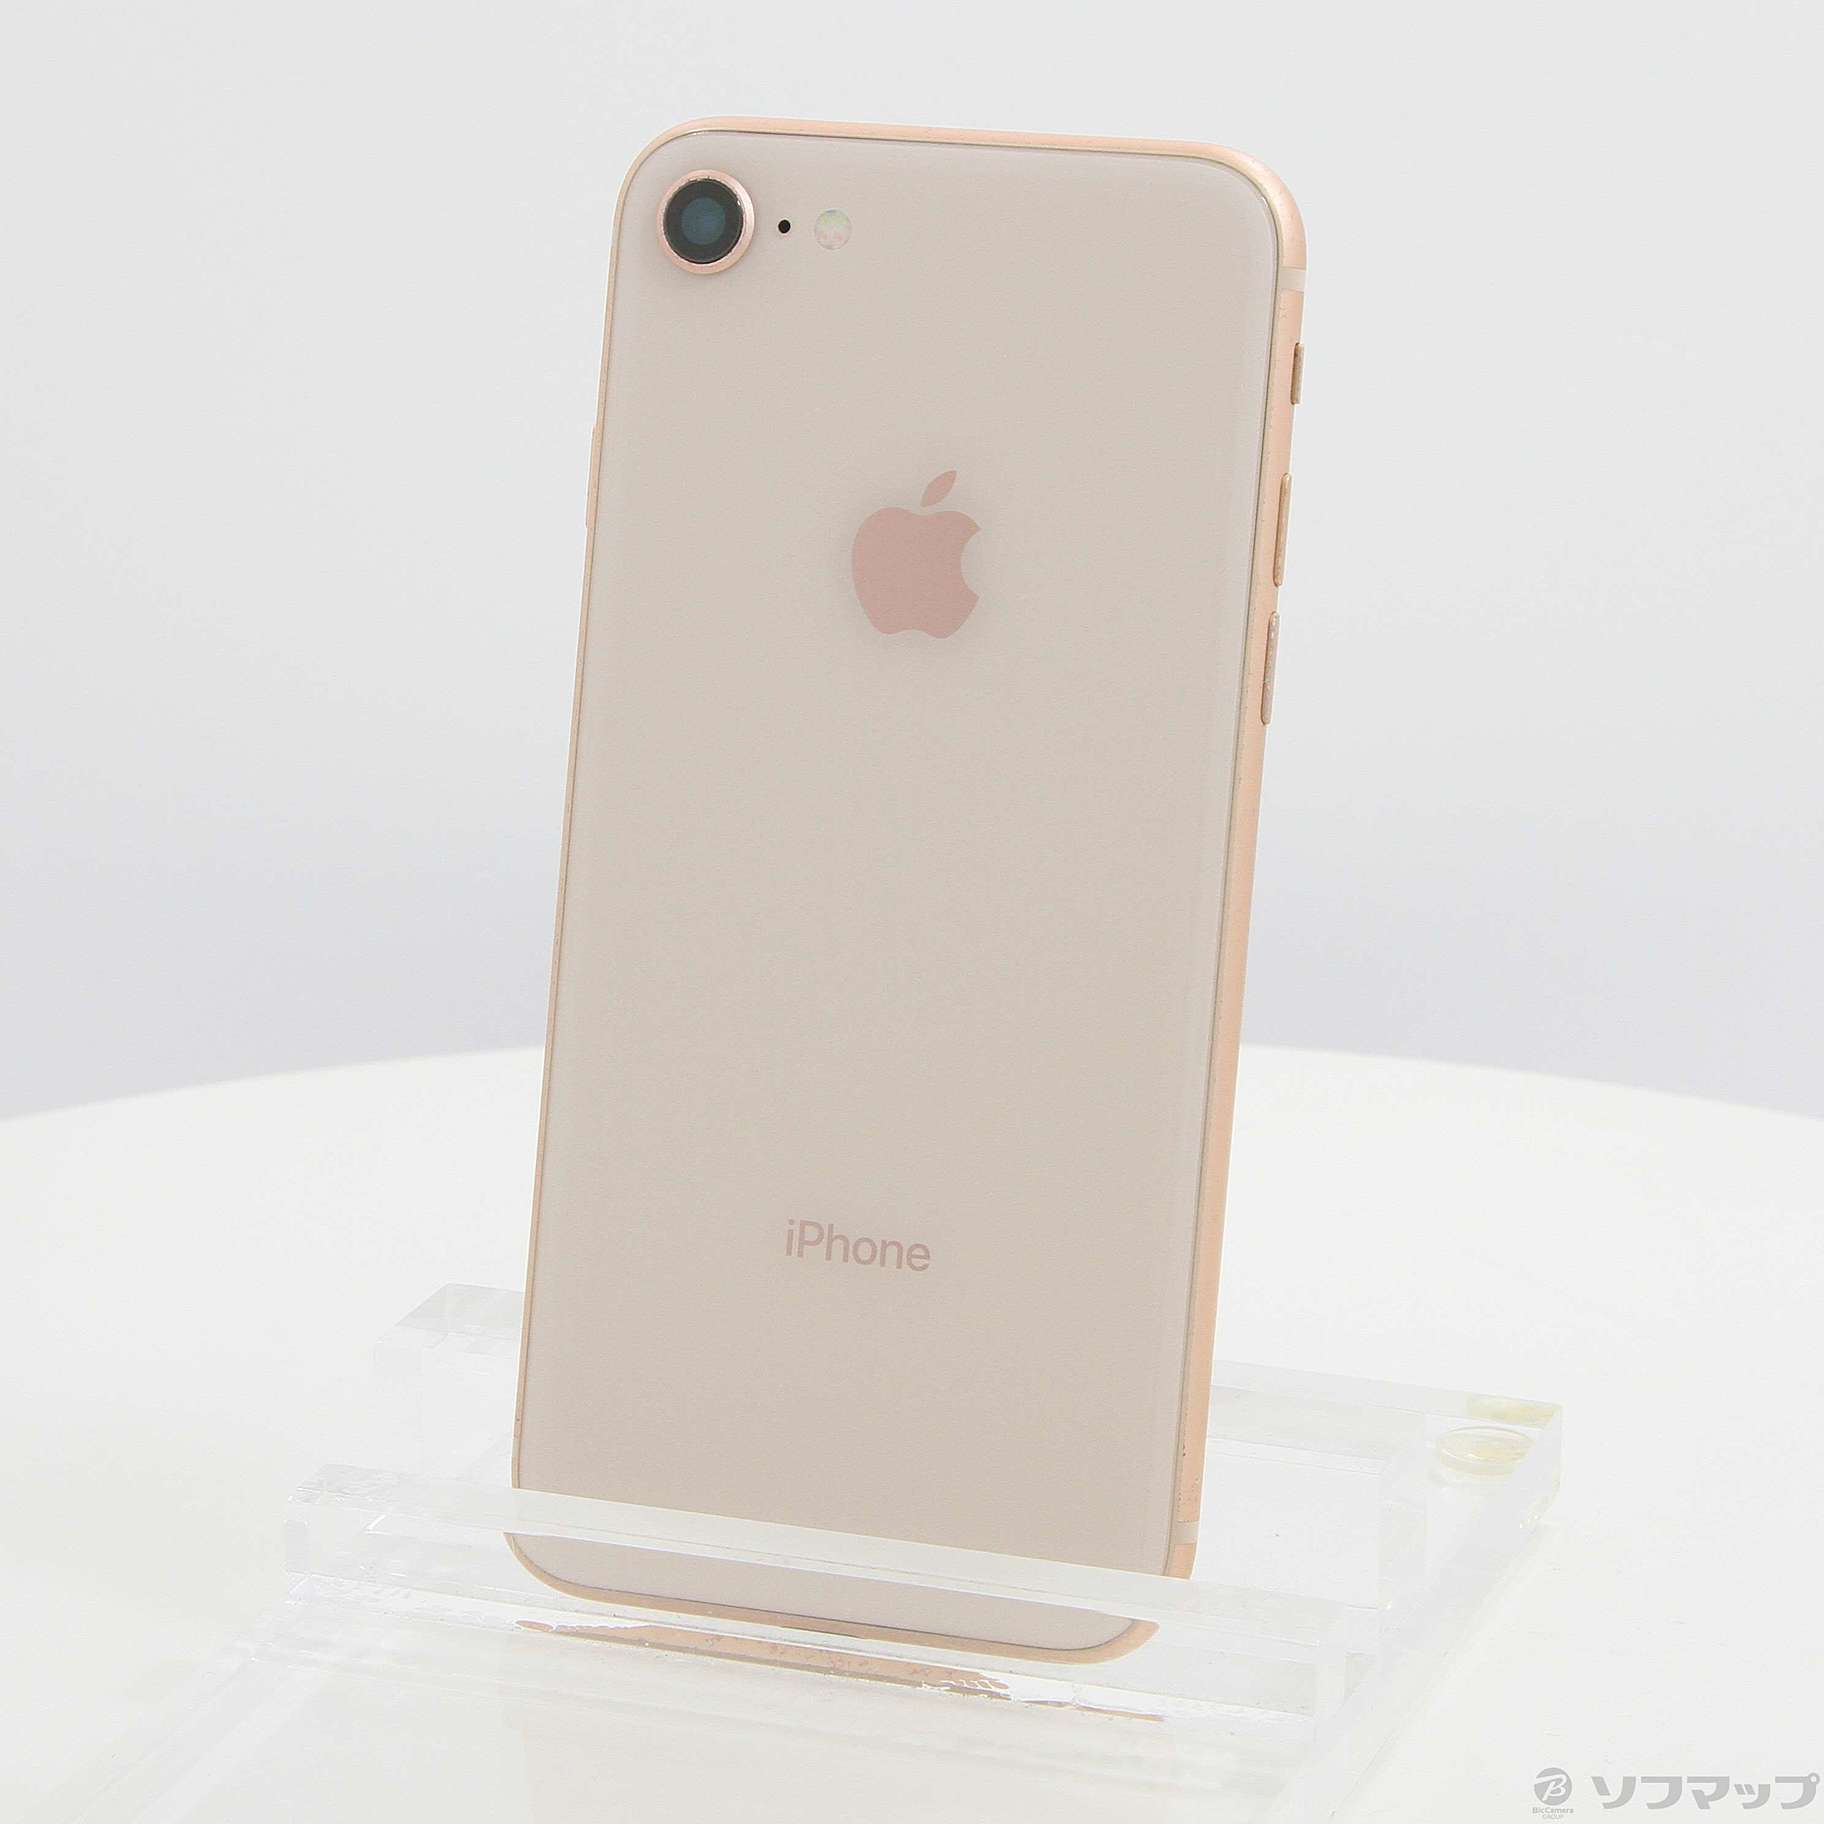 iPhone 7plus 128GB rose gold ios13 ジャンク - スマートフォン本体